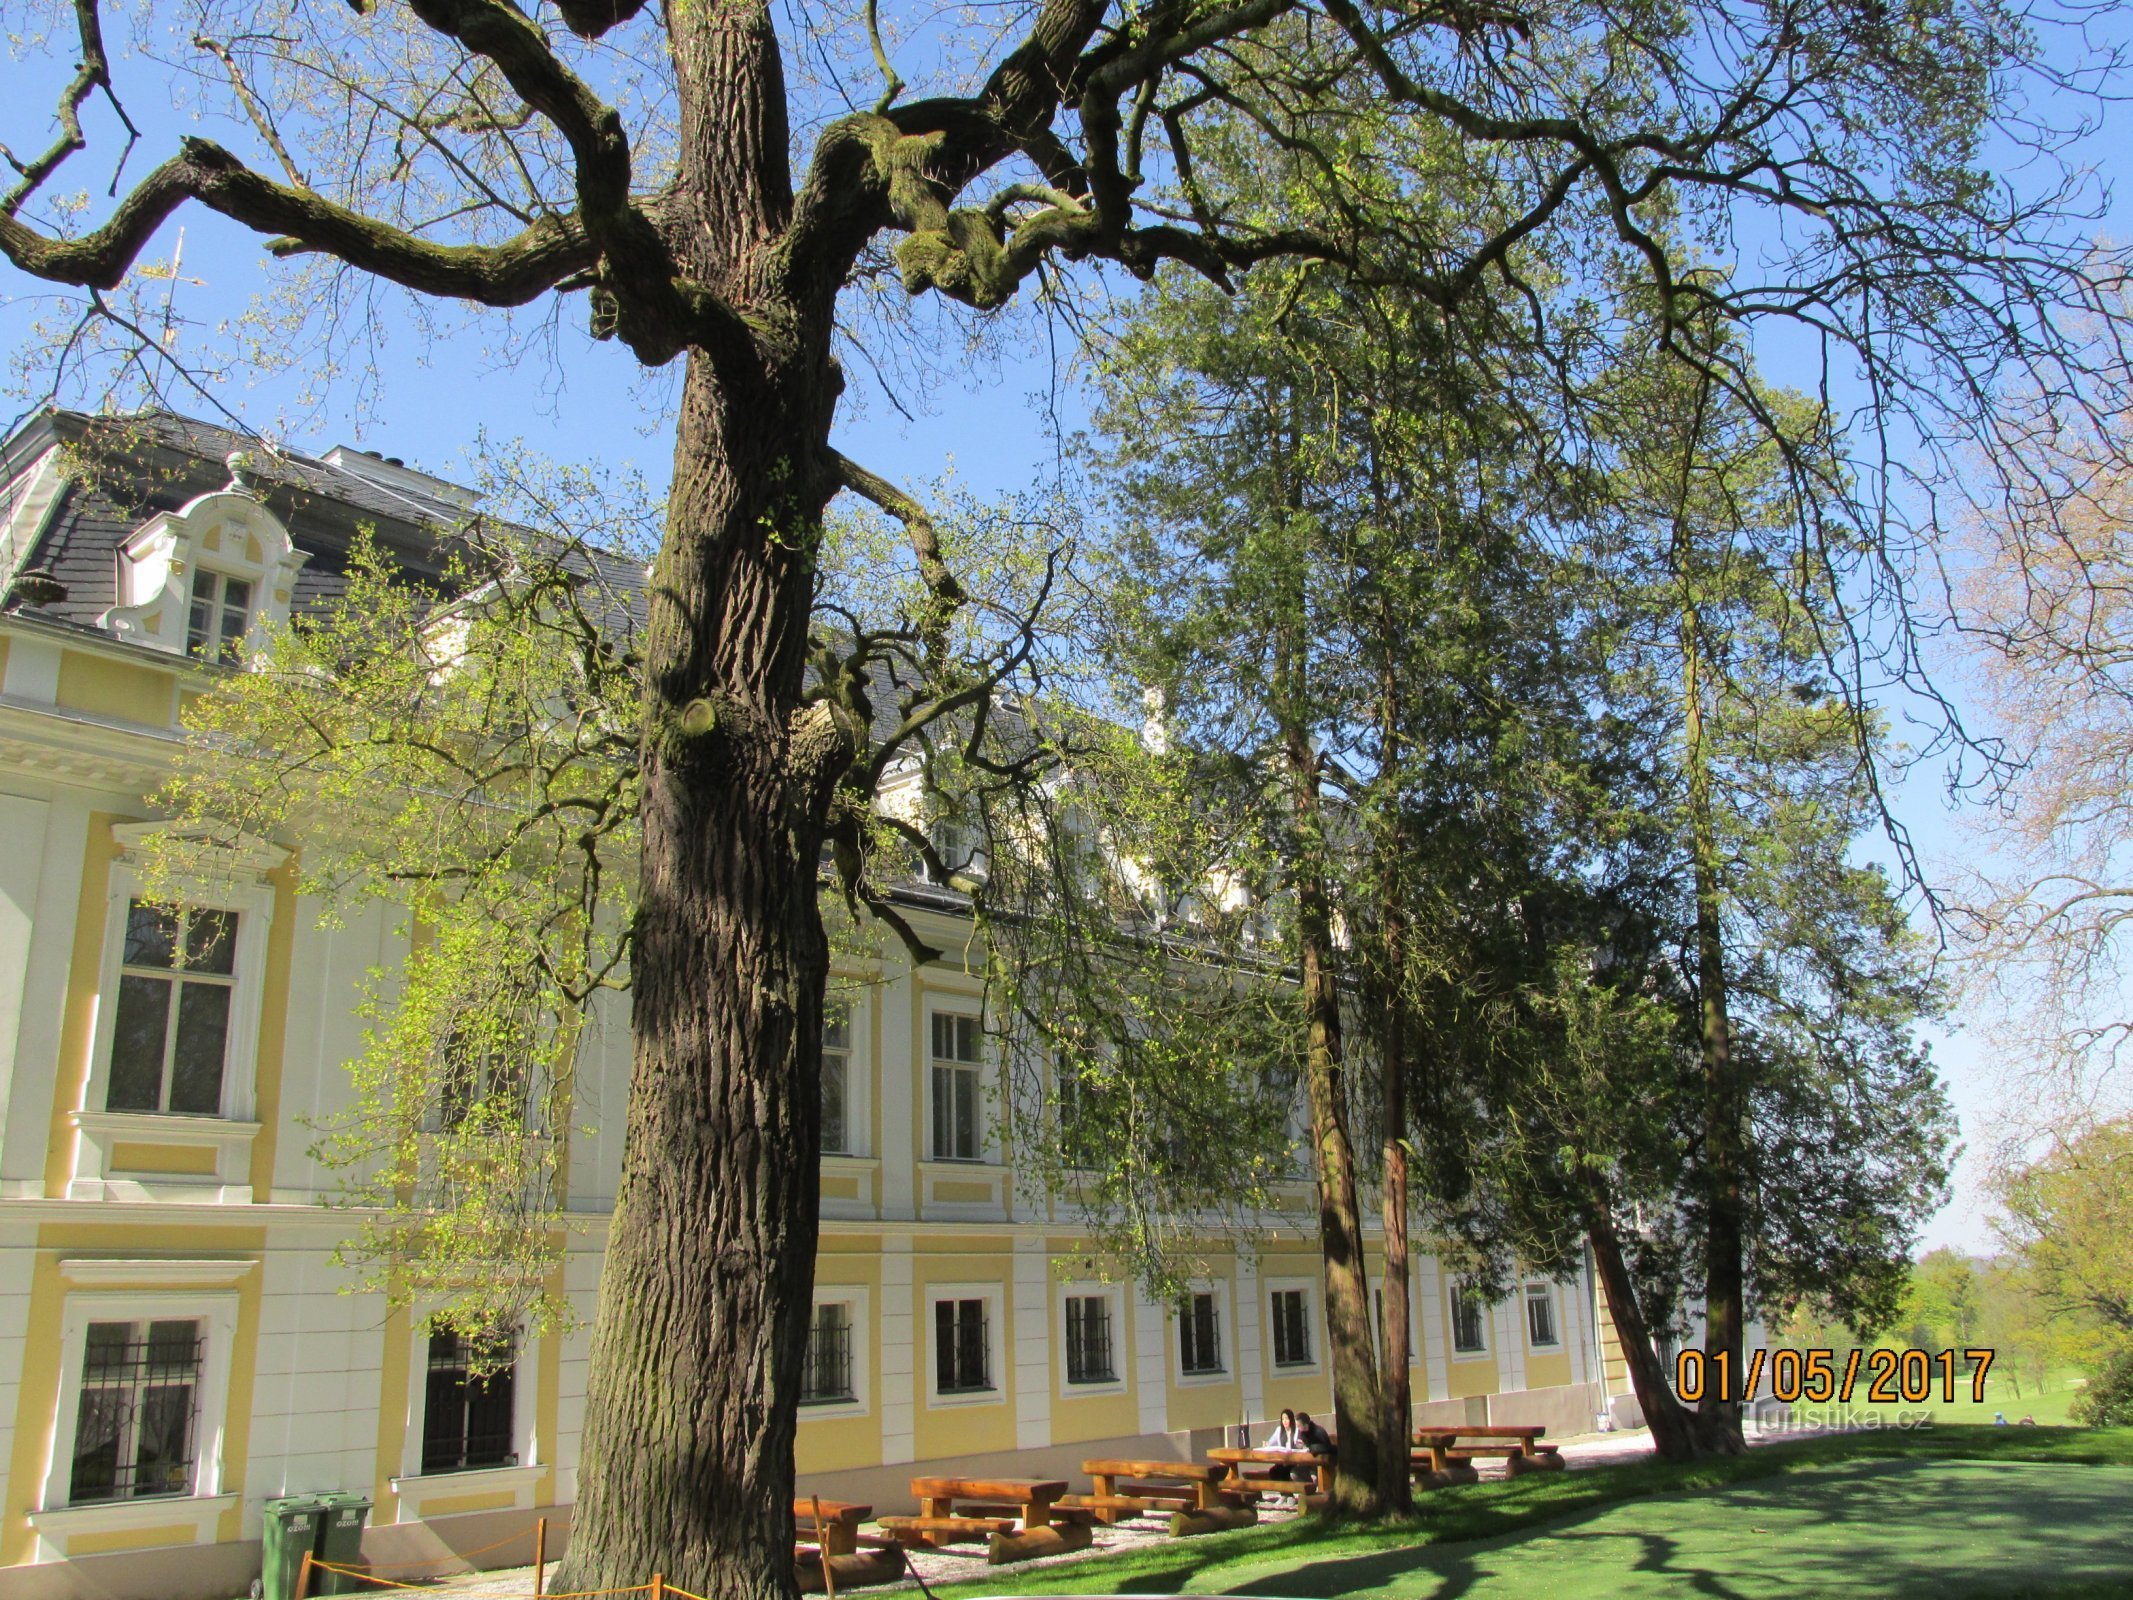 Šilheřovice slottspark